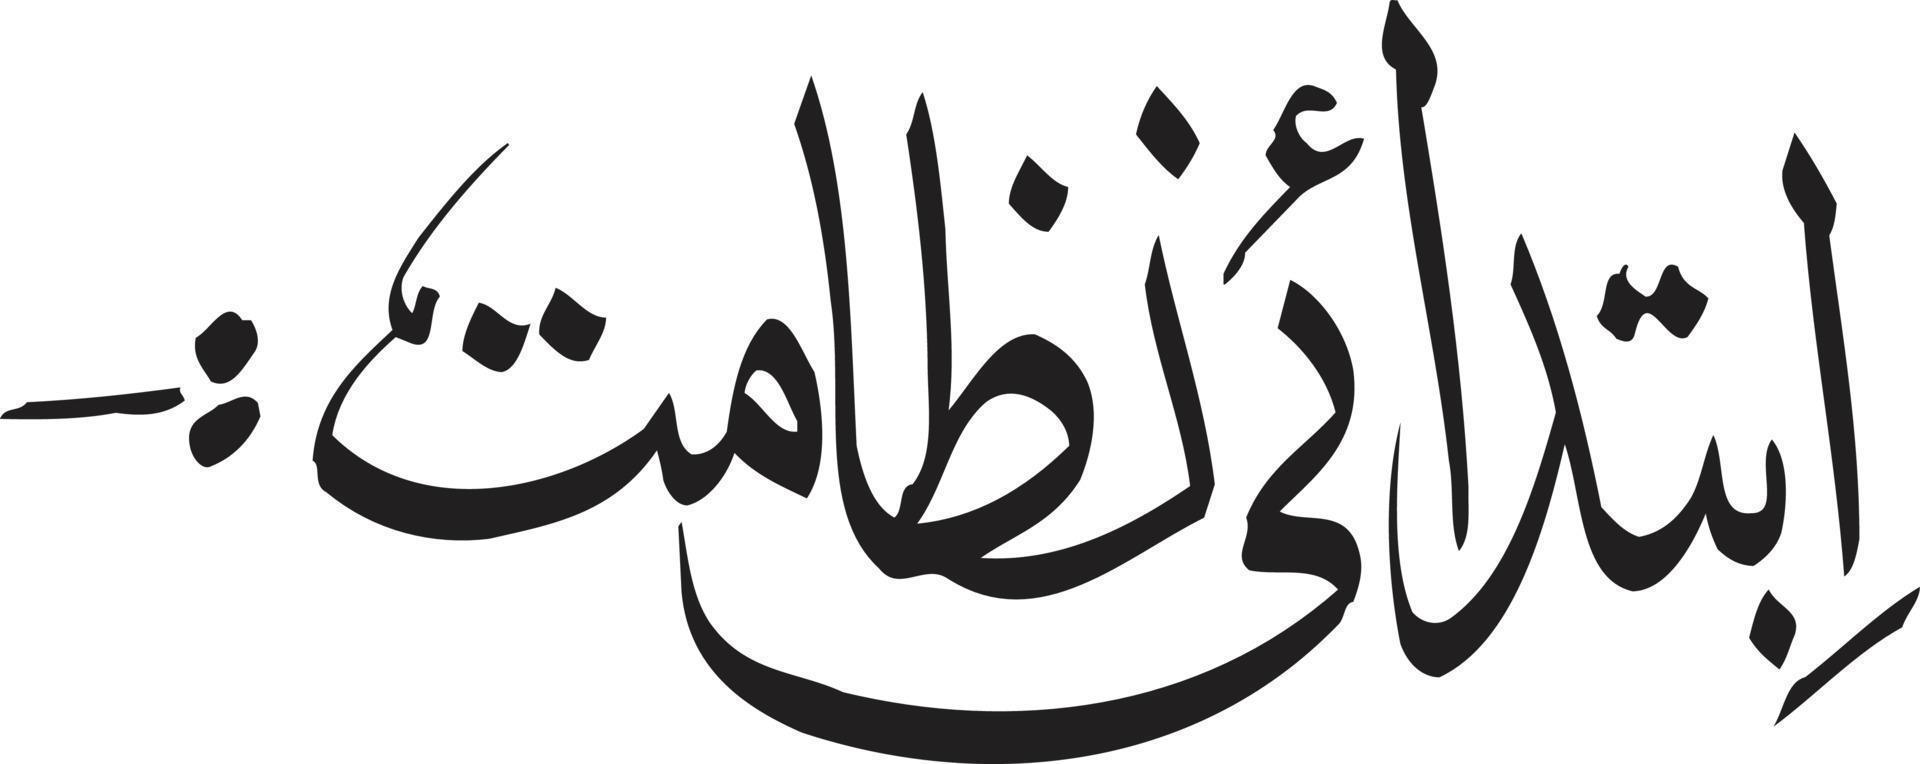 ibtaday nezamat caligrafía islámica vector libre